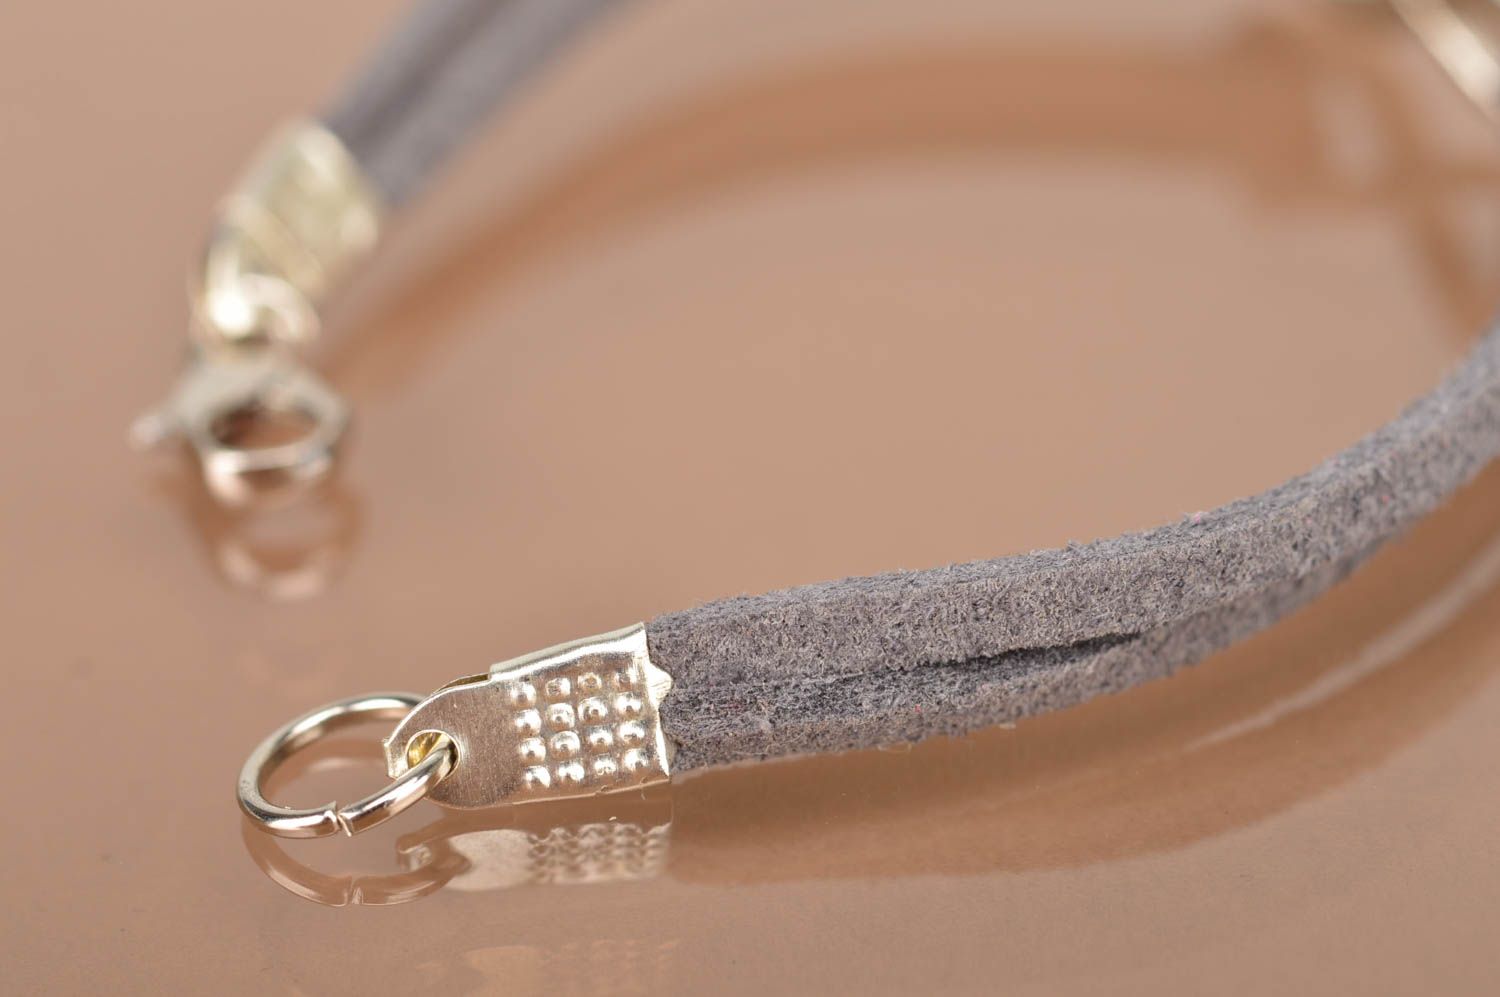 Stylish handmade suede cord bracelet wrist bracelet designs gifts for her photo 5